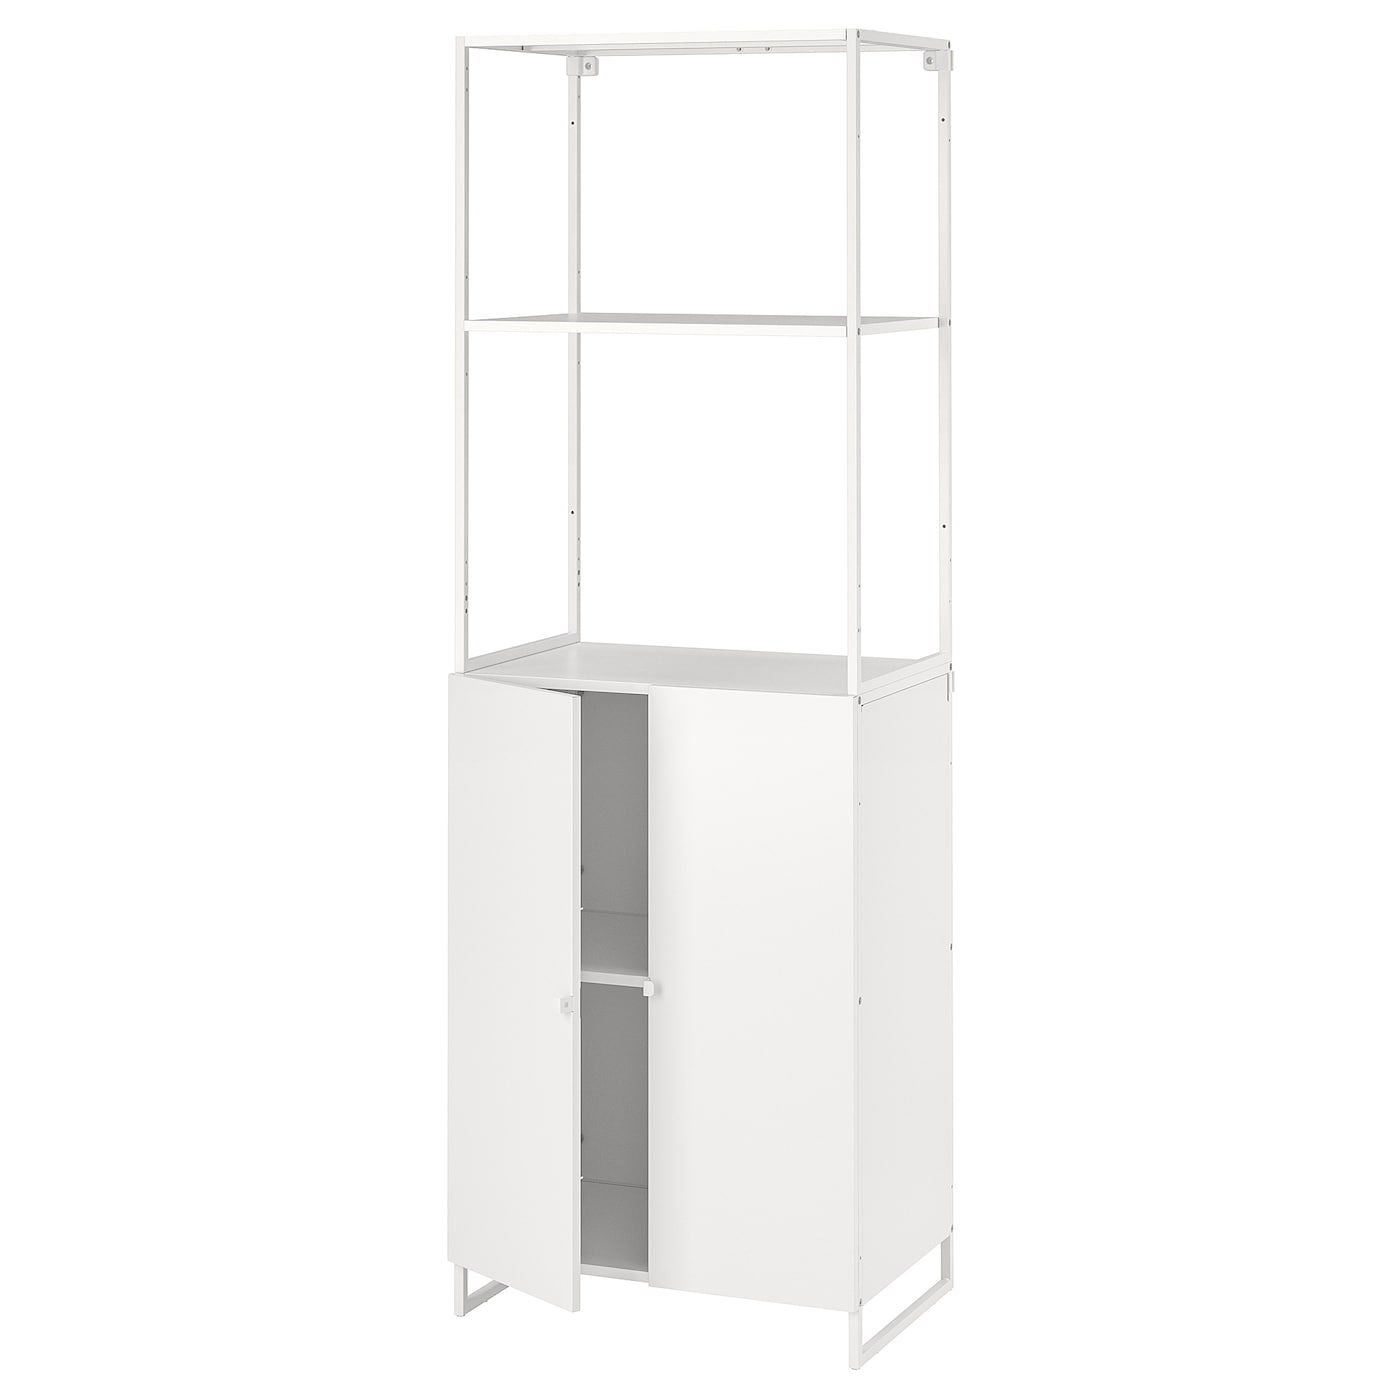 Книжный шкаф - JOSTEIN IKEA/ ЙОСТЕЙН ИКЕА,  180х61 см, белый